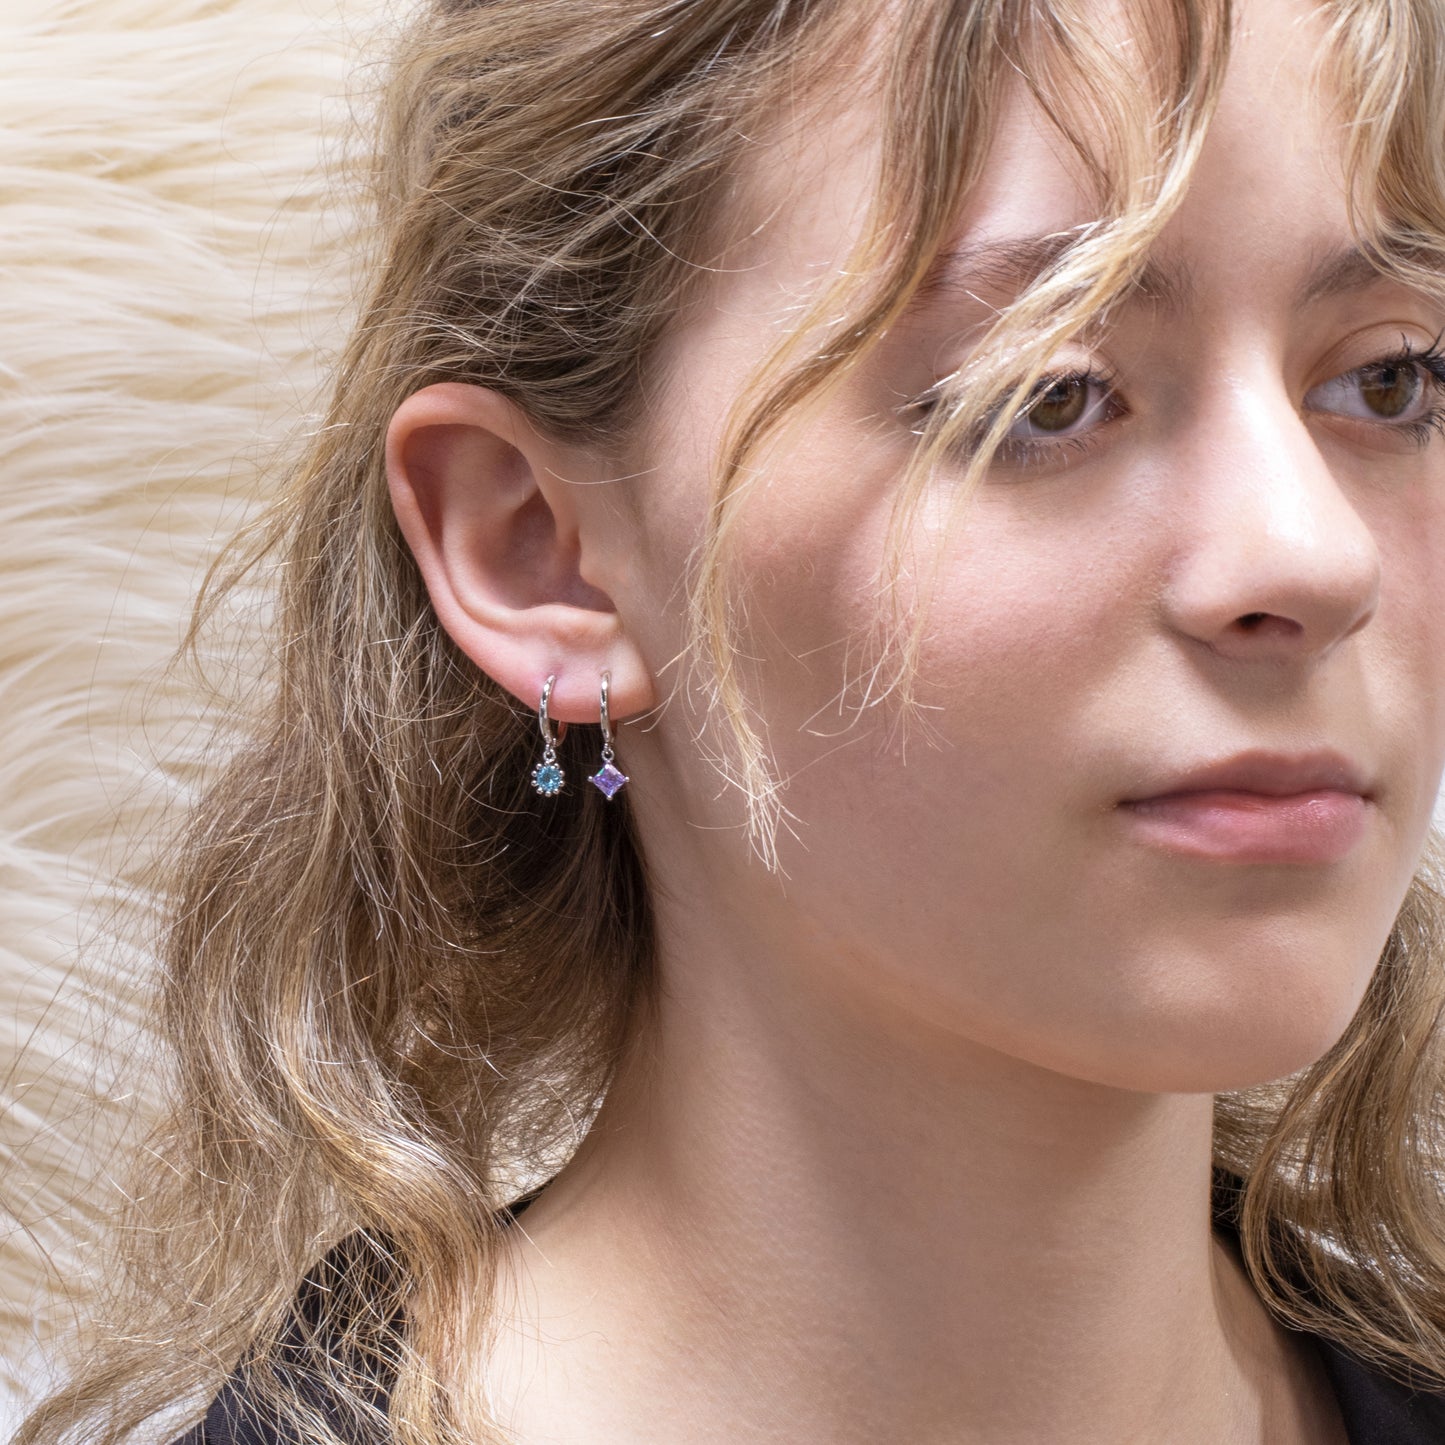 Huggie Earrings With Colorful Gemstone Charm